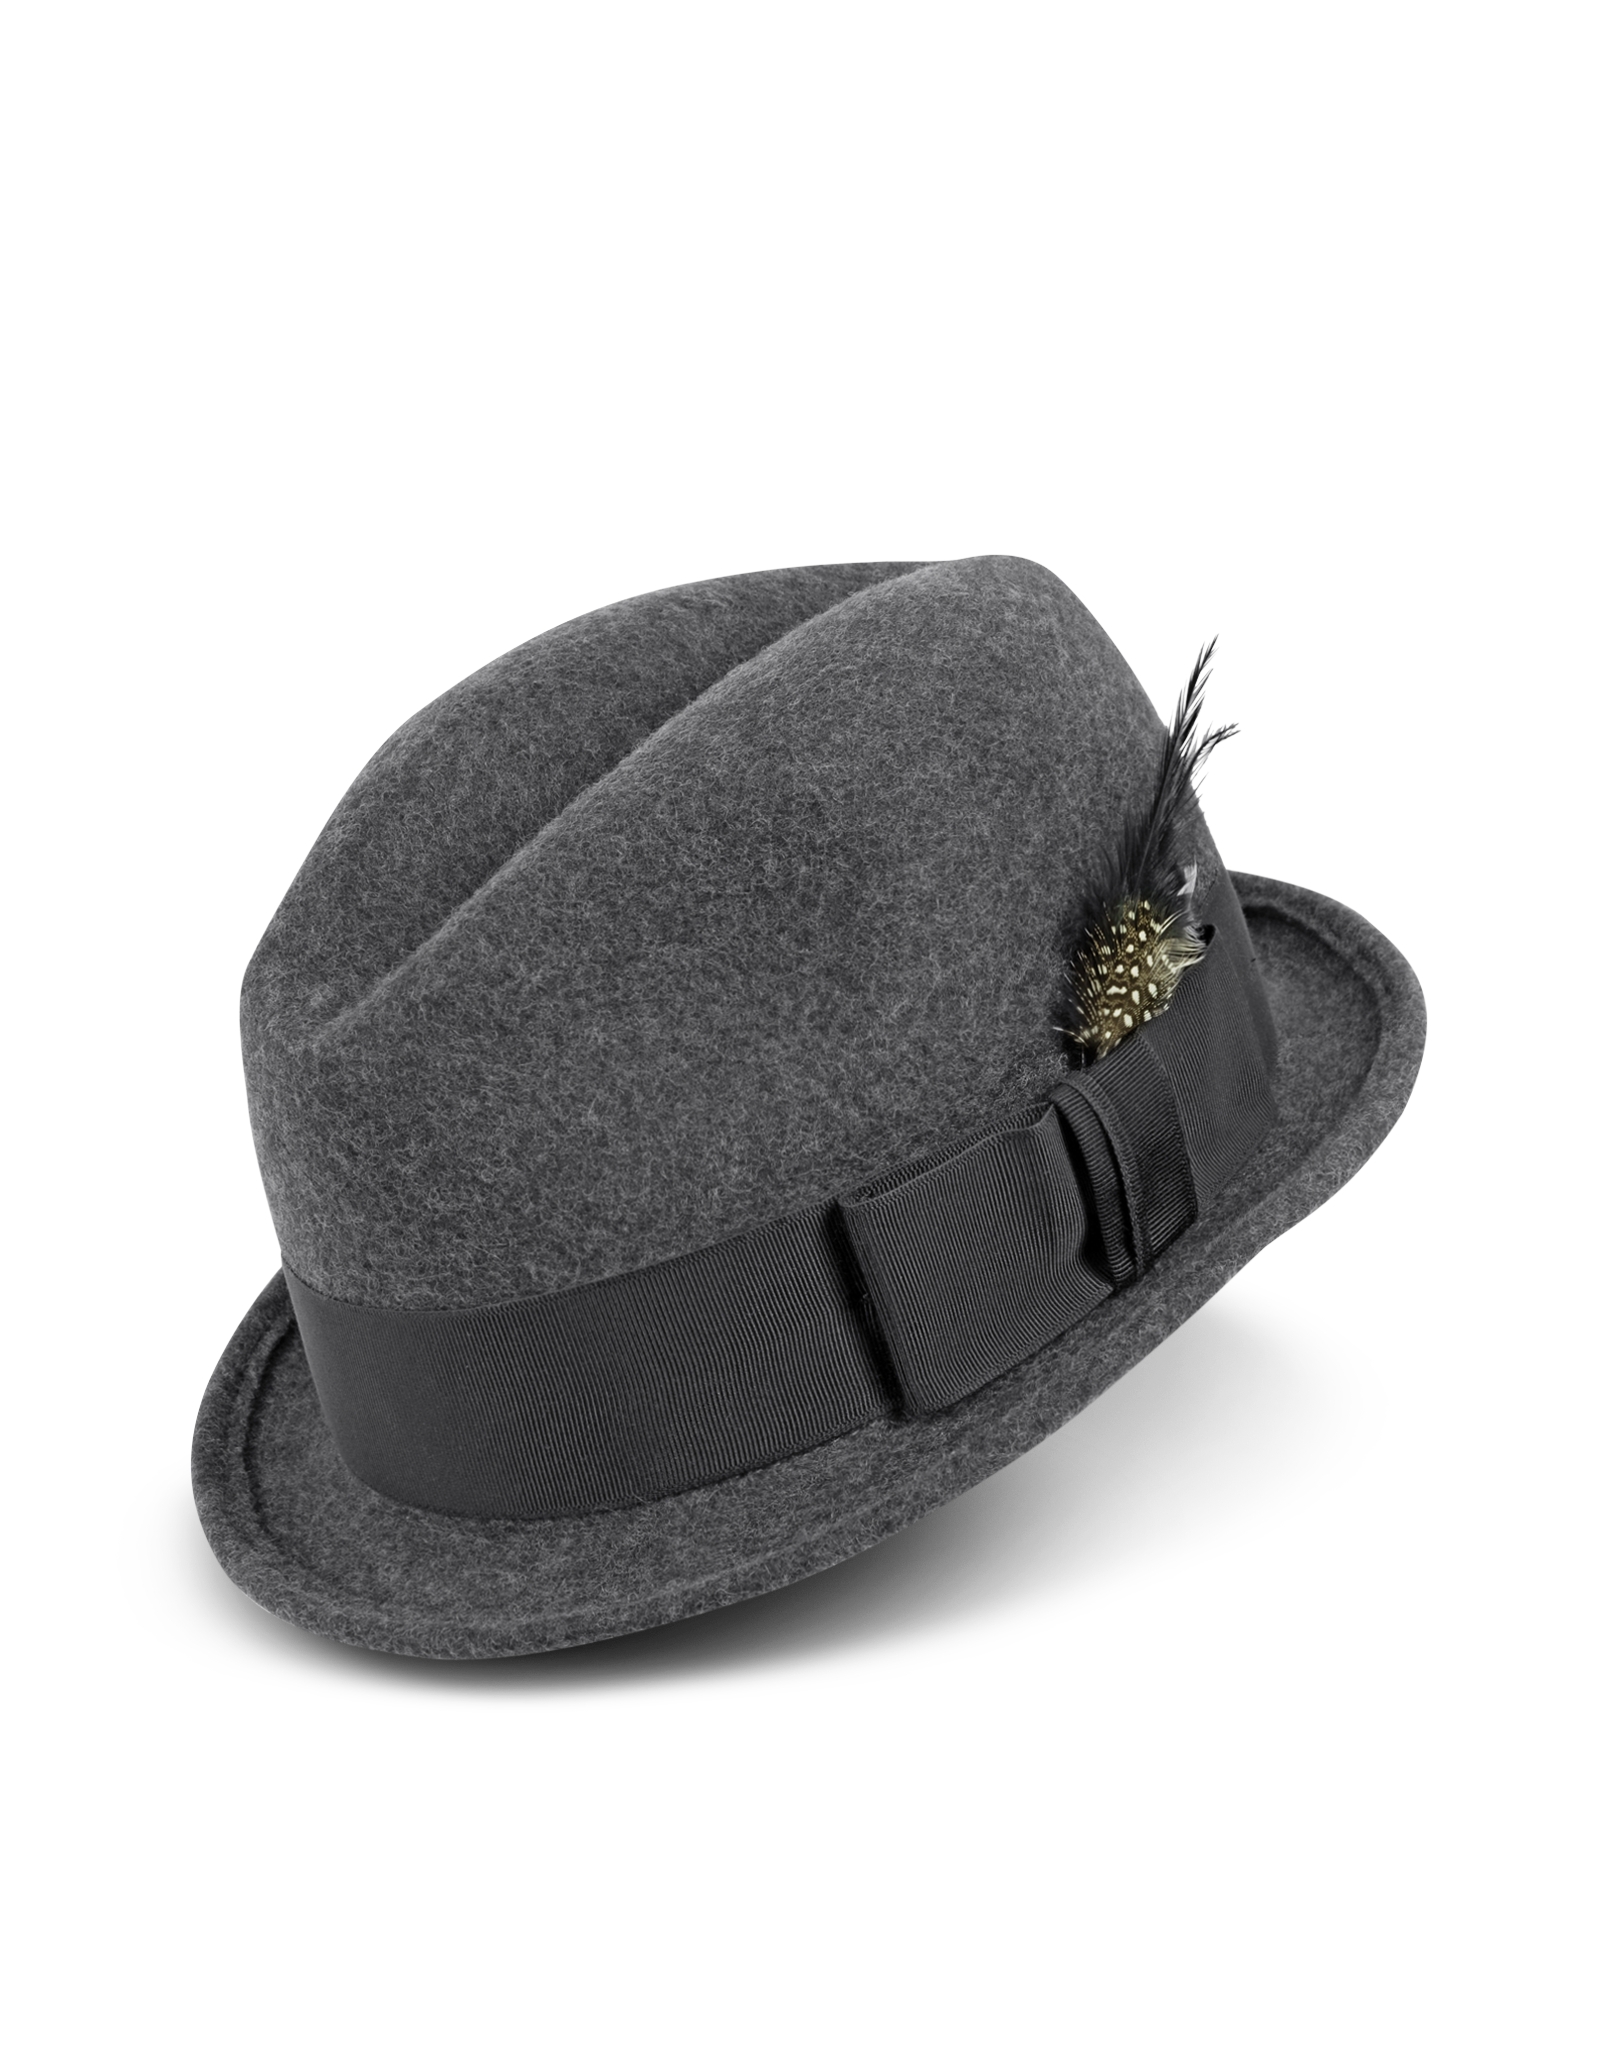 Paul smith Christys Grey Melange Trilby Hat in Gray for Men | Lyst